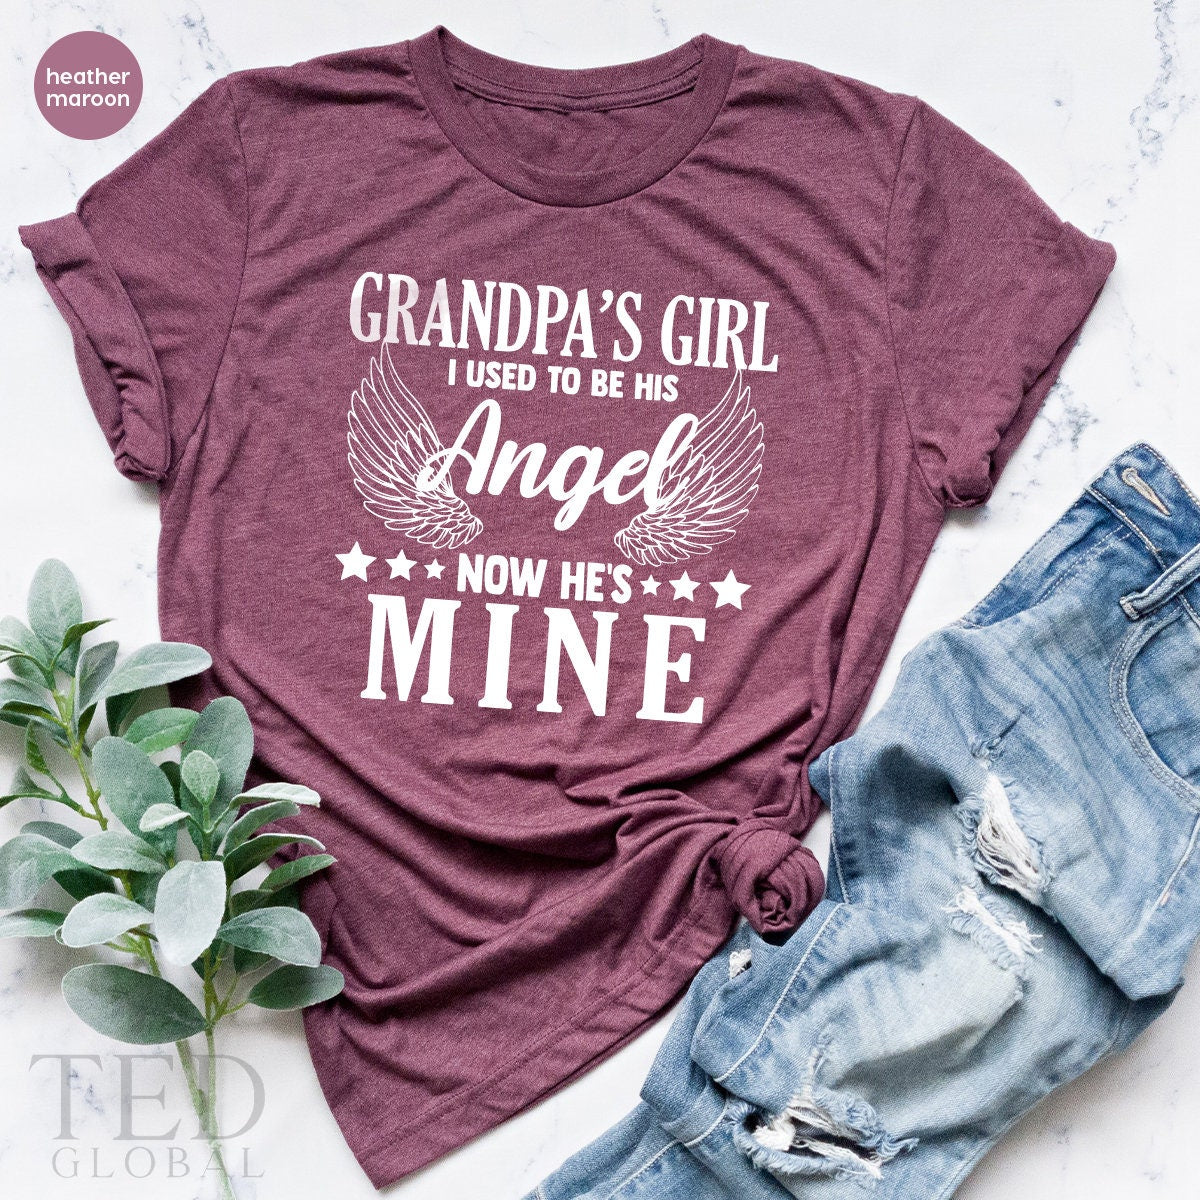 Grandfather Memorial T-Shirt, Bereavement T Shirt, Grandad Remembrance TShirt, Rest In Peace Shirt, Grandpa's Girl Shirt, Angel Wings Tees - Fastdeliverytees.com